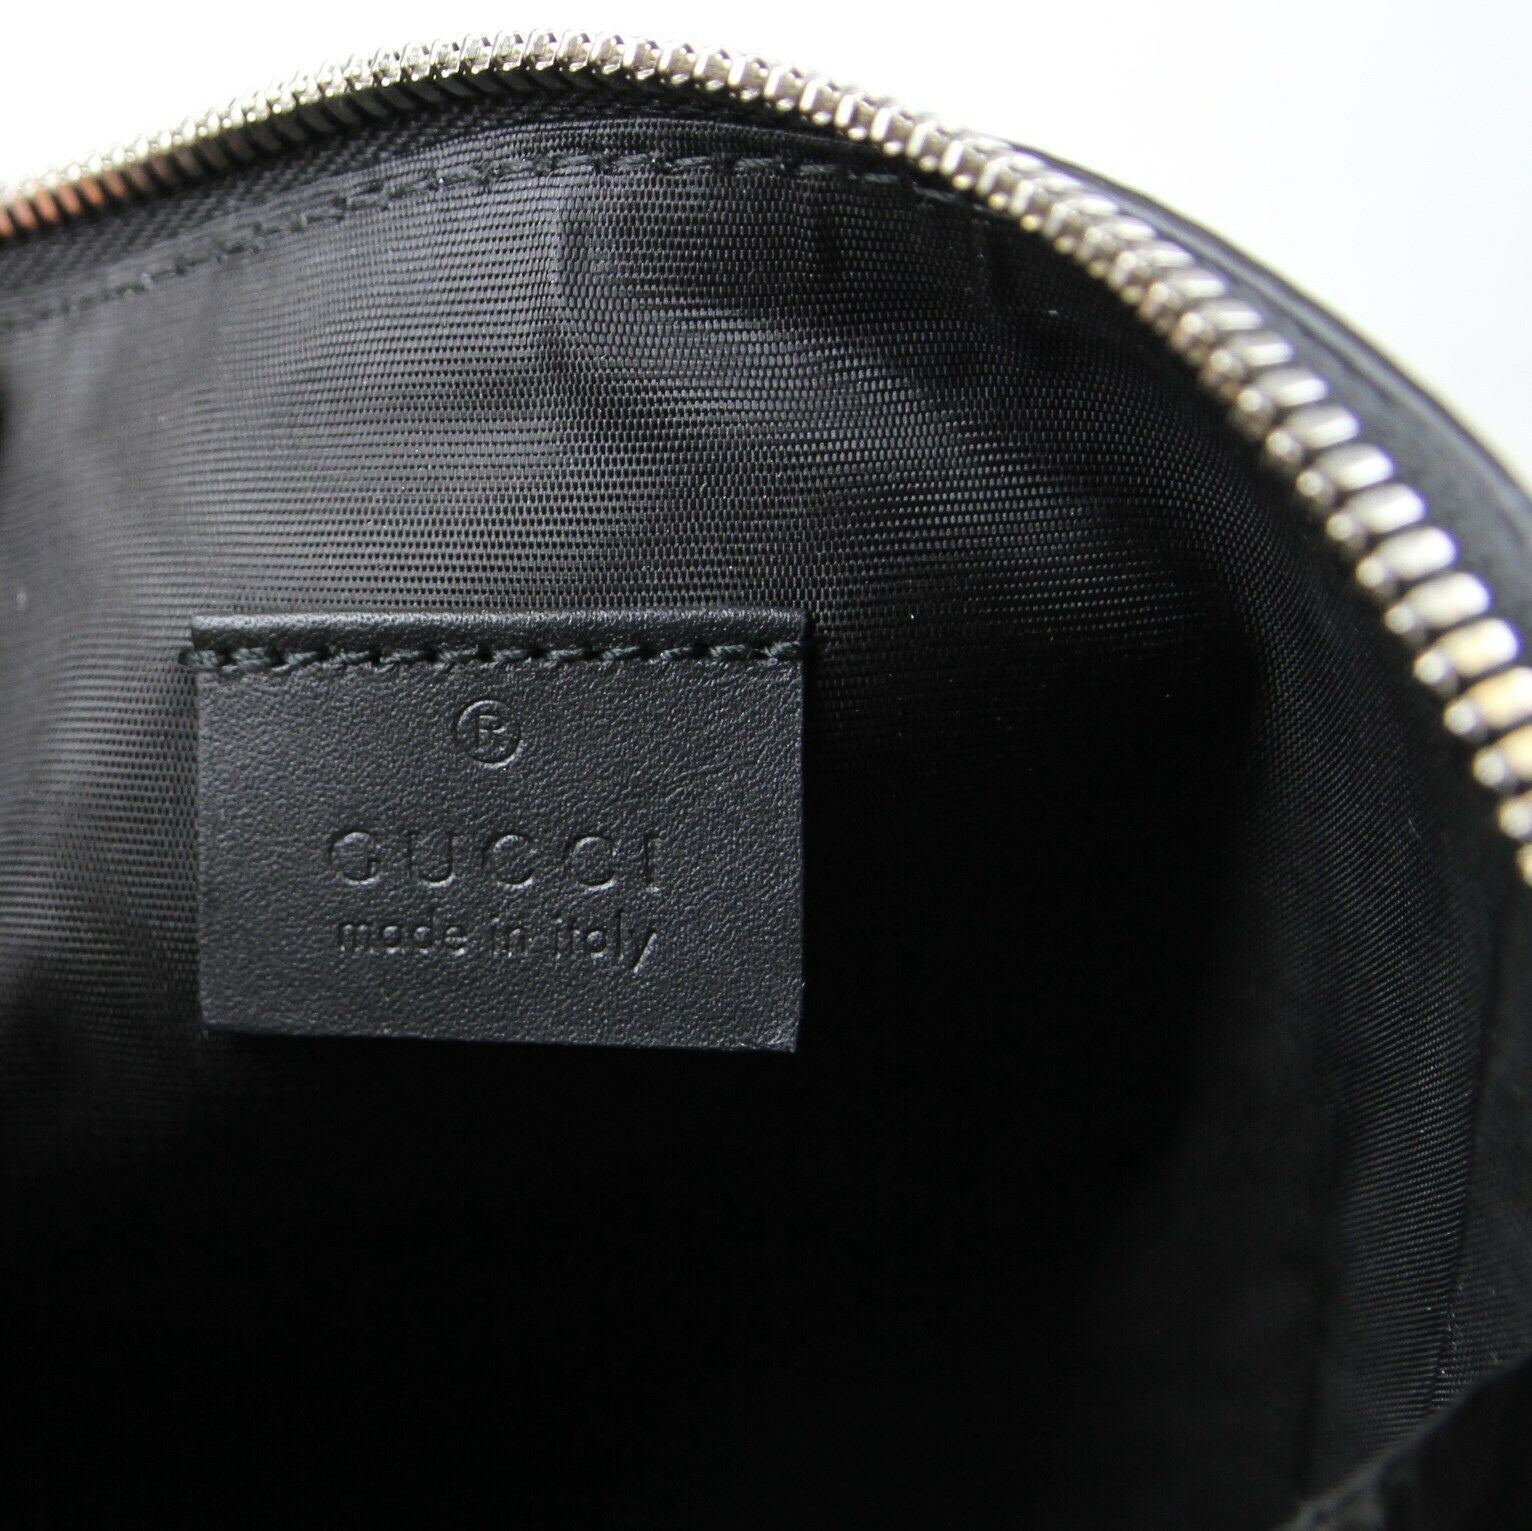 Gucci Gucci Women Black Guccy Sega Script Dome Mini Crossbody Bag